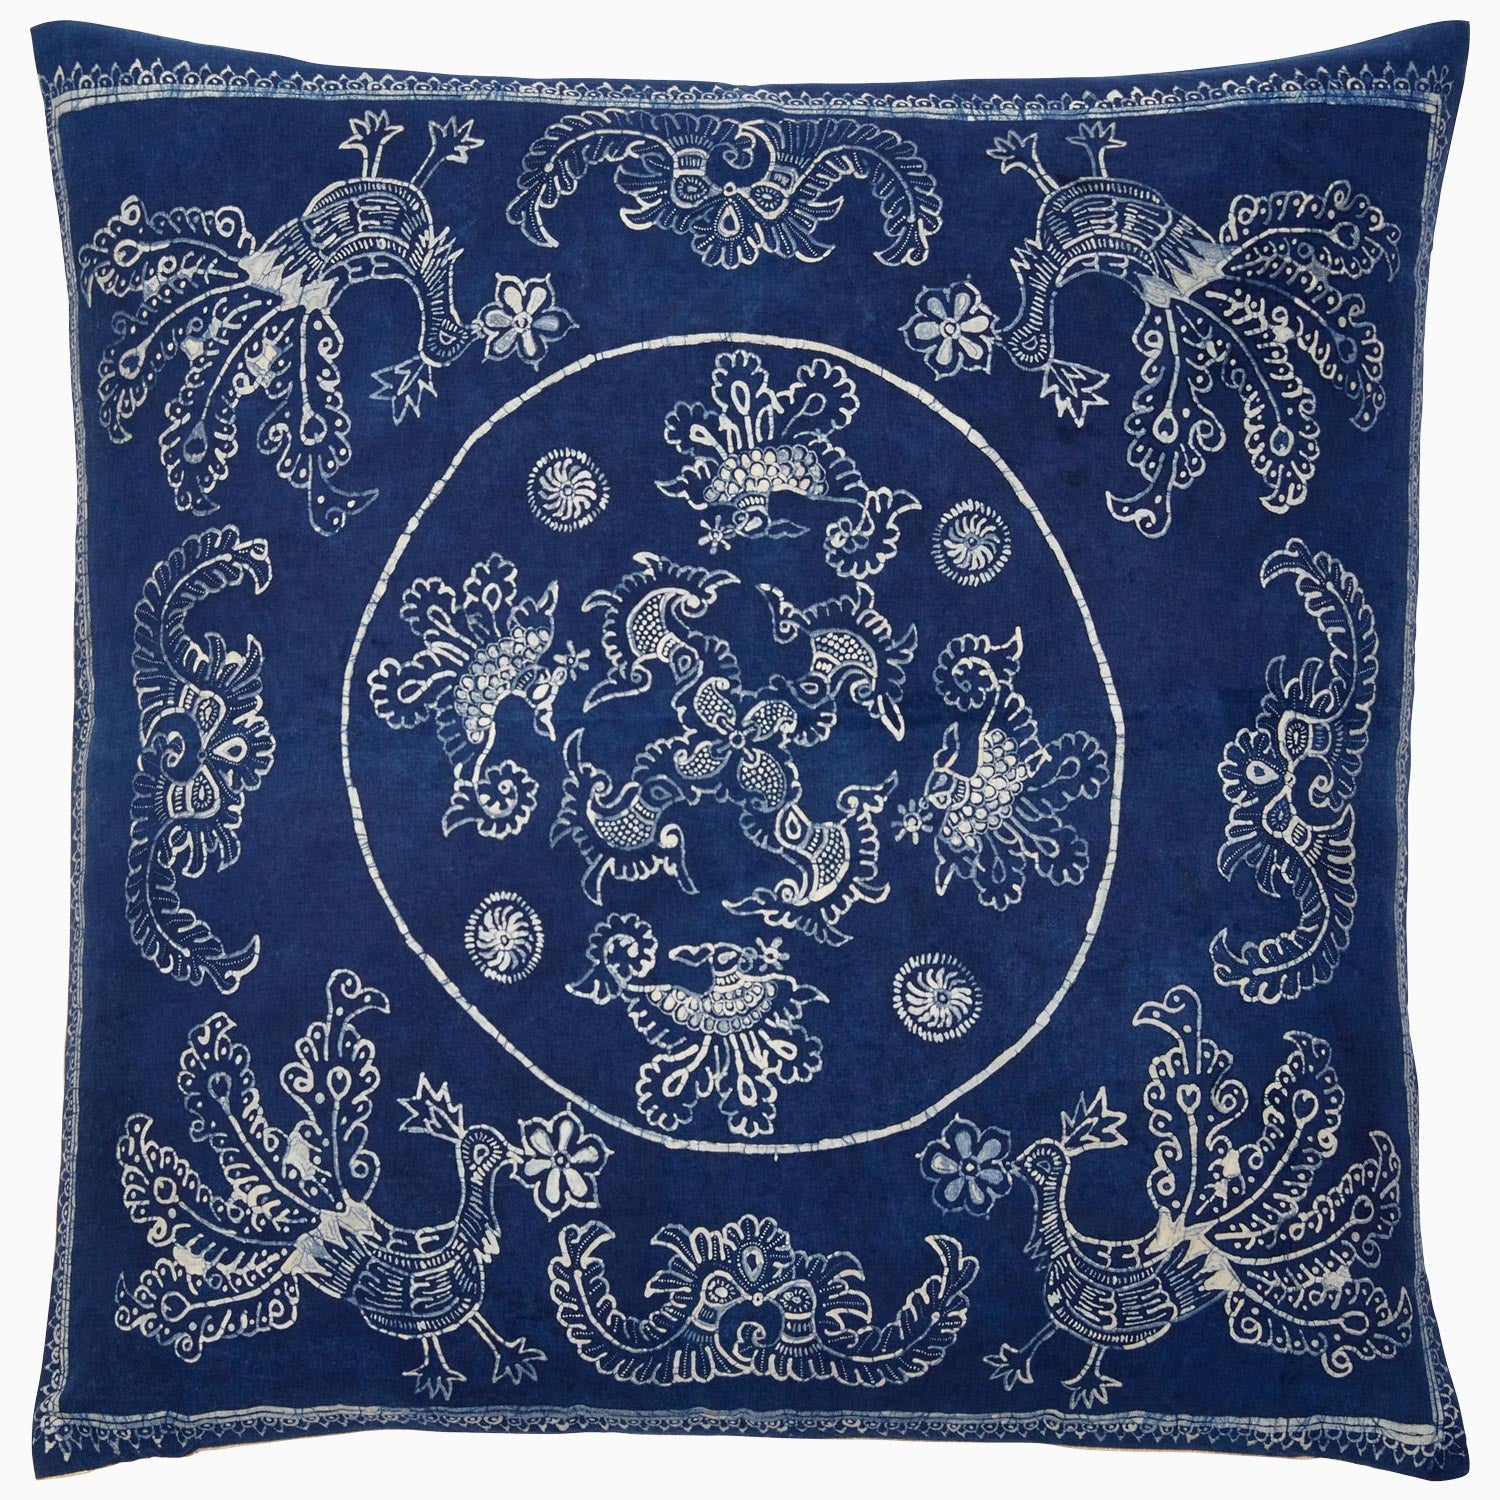 Central Blue Decorative Pillow Main